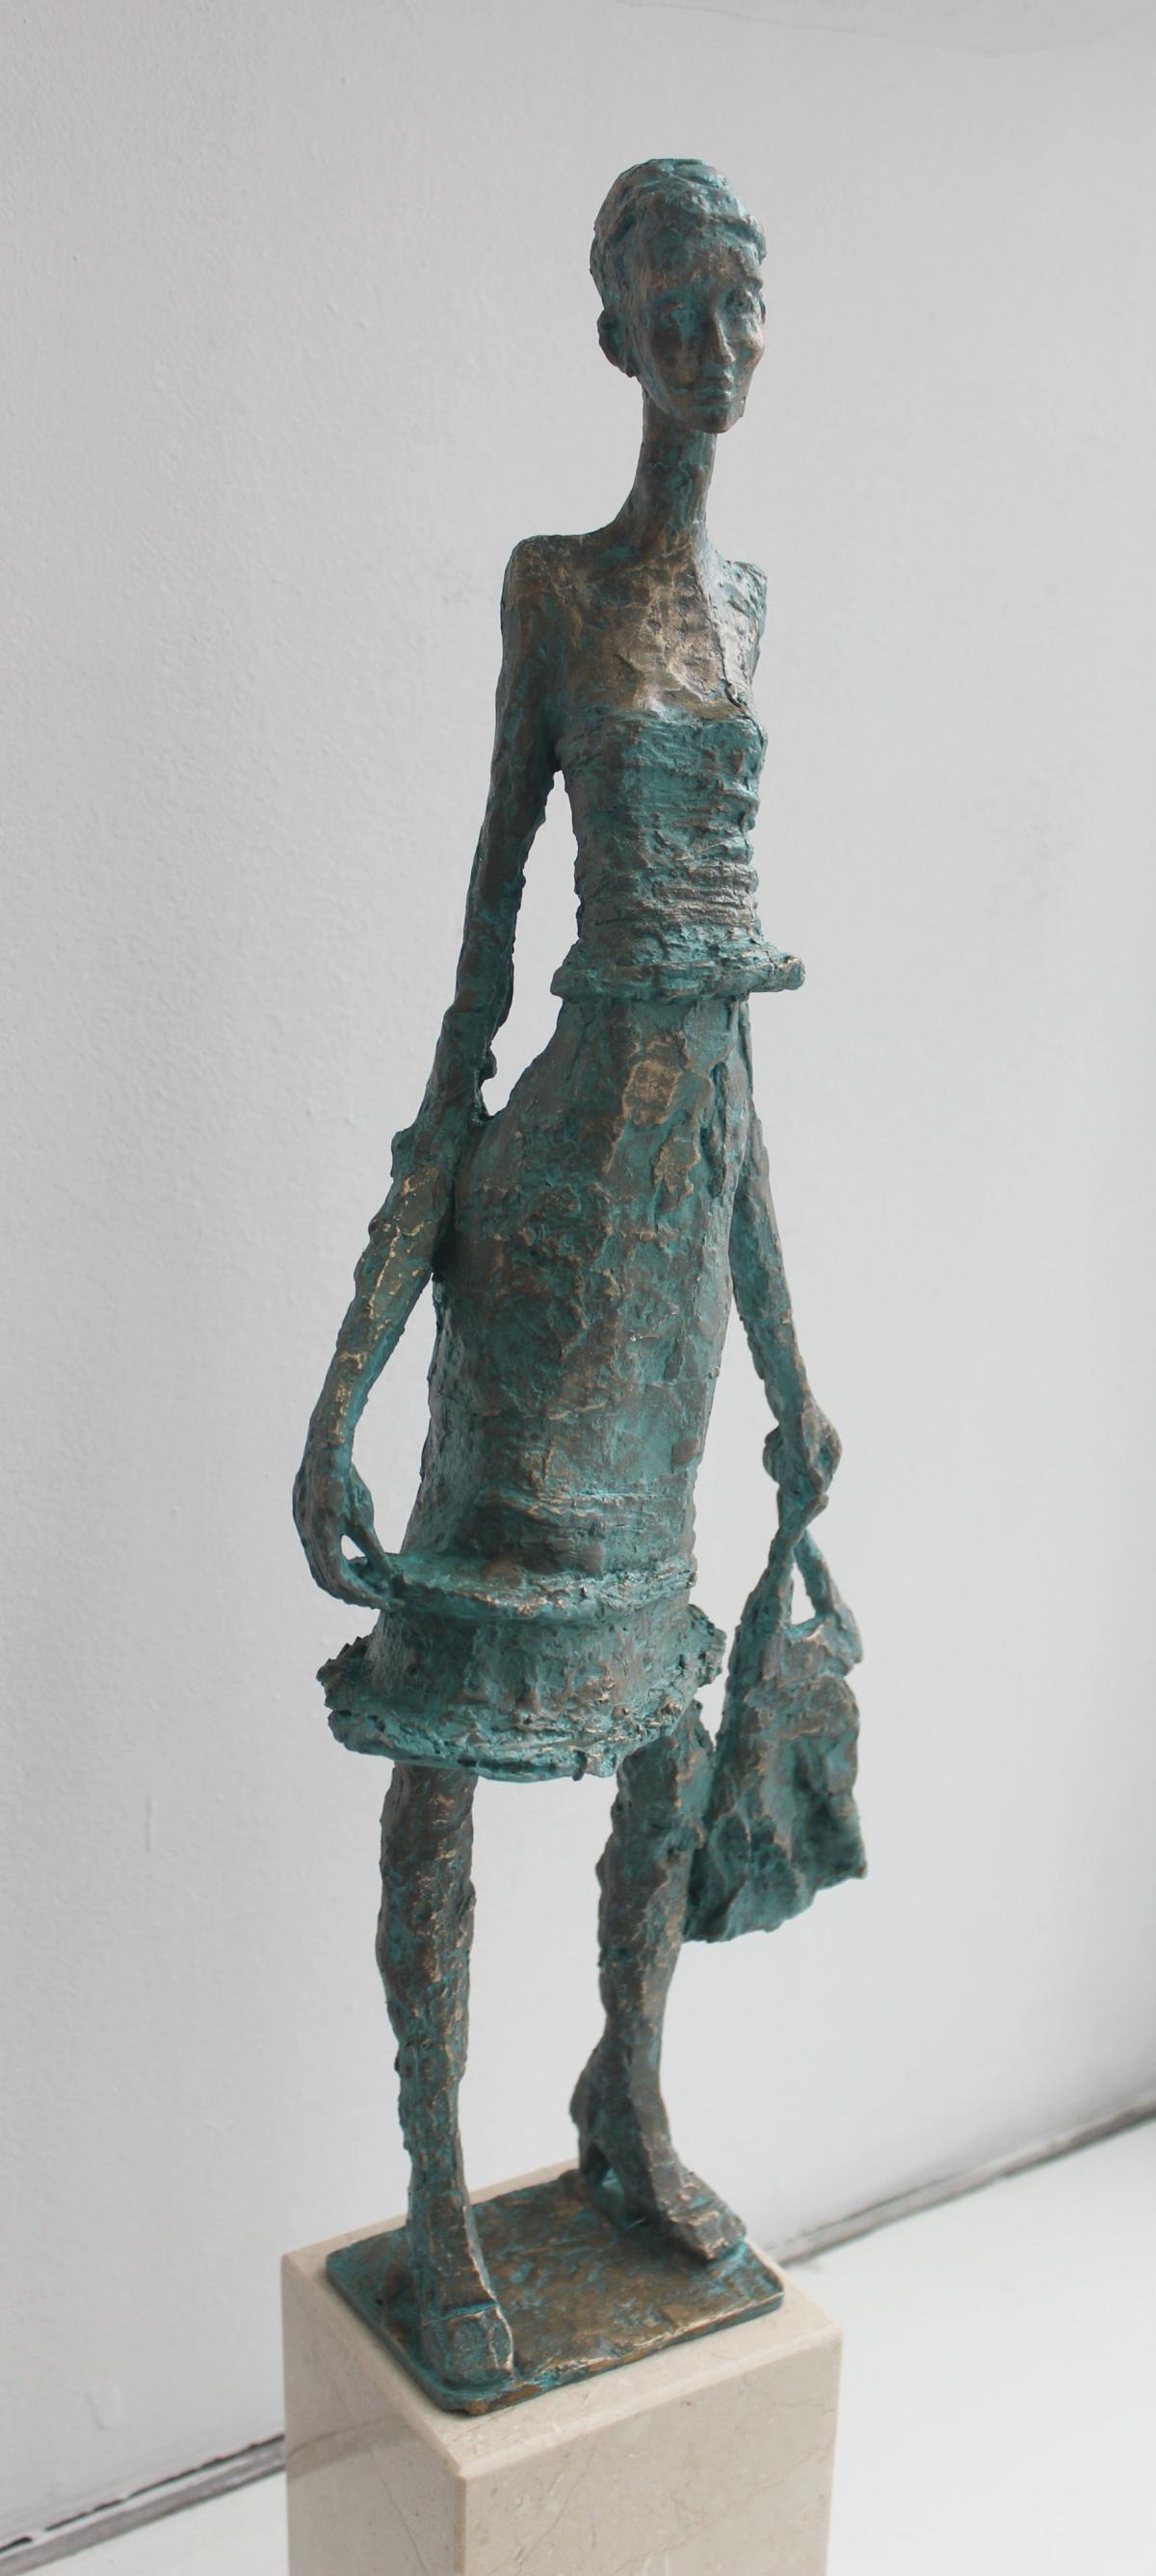 Woman with a purse - XXI Jahrhundert:: Figurative Skulptur:: Bronze und Marmor (Gold), Figurative Sculpture, von Jadwiga Lewandowska